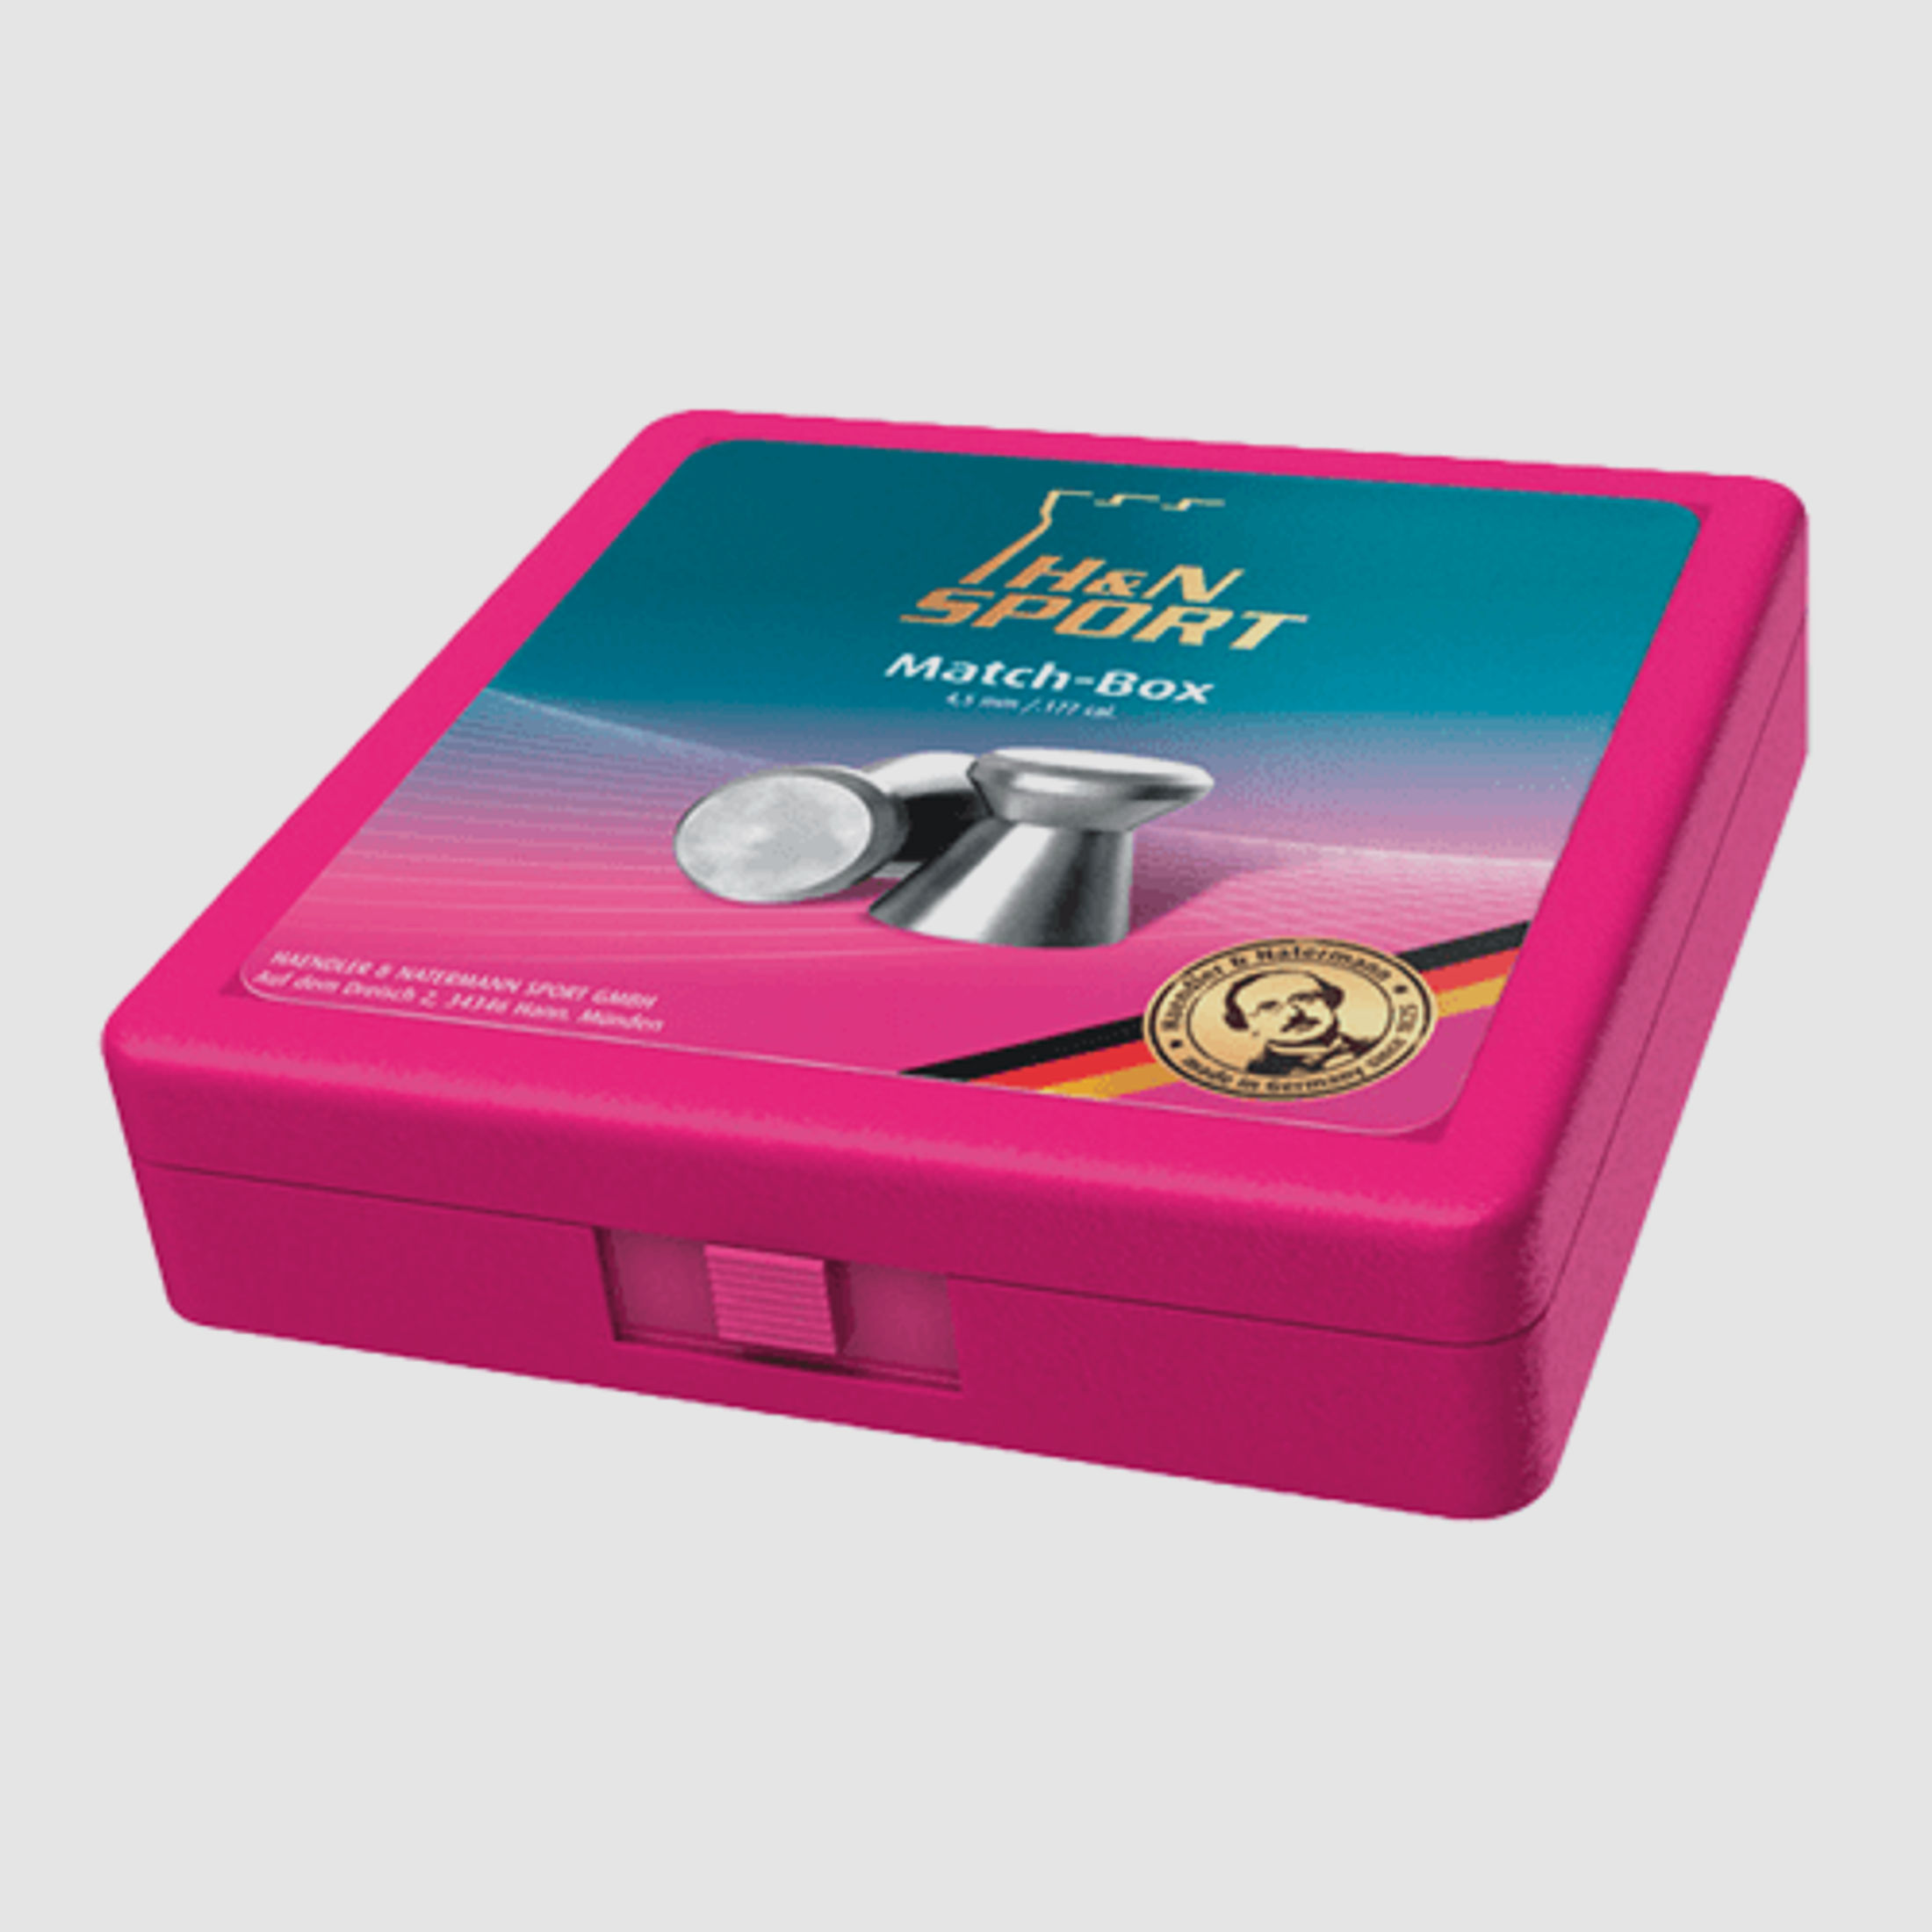 H&N Final Match Box Diabolos Aufbewahrungsbox - Pink